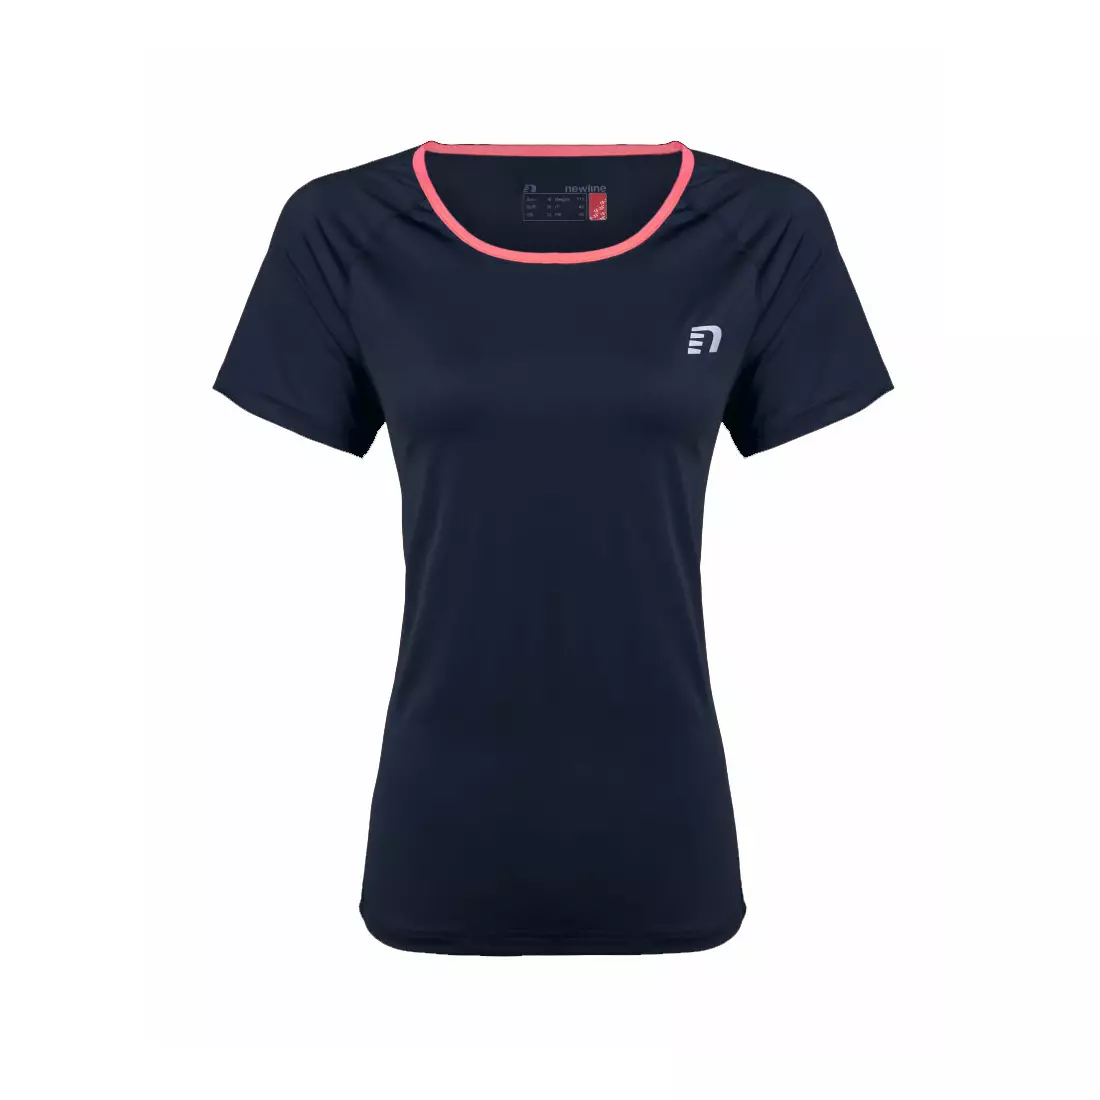 NEWLINE IMOTION TEE Damen-Lauf-T-Shirt 10814-275